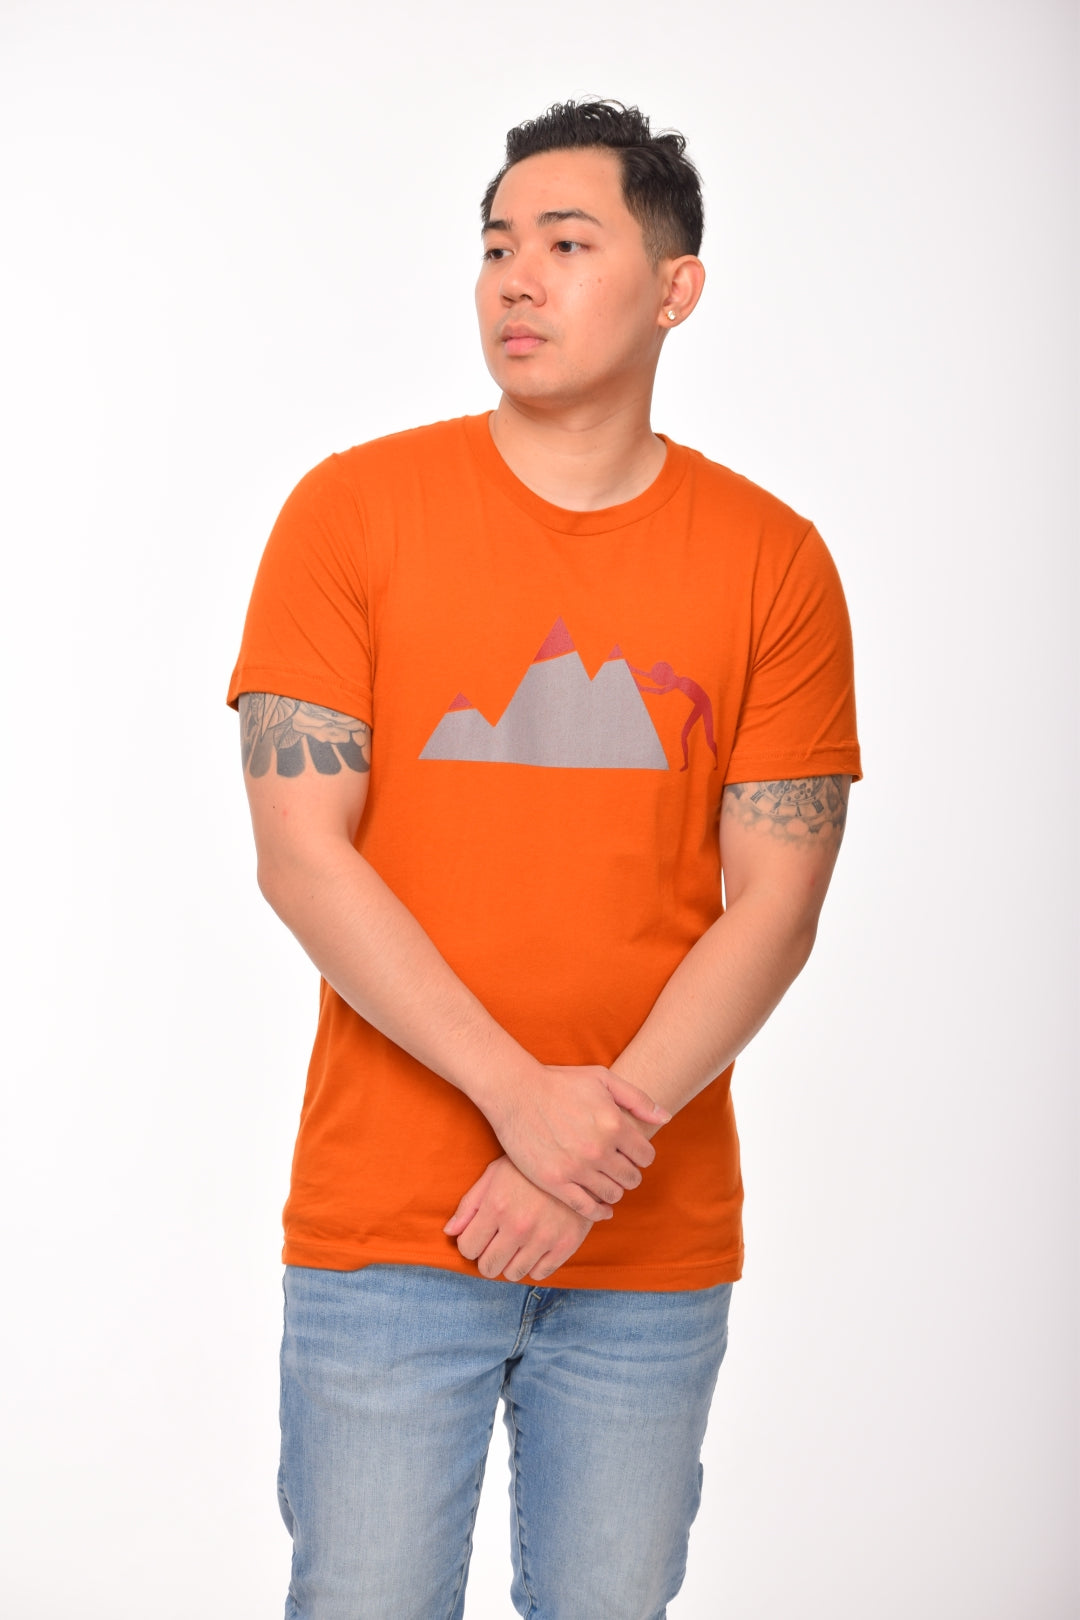 Move Mountains Unisex Premium T-Shirt